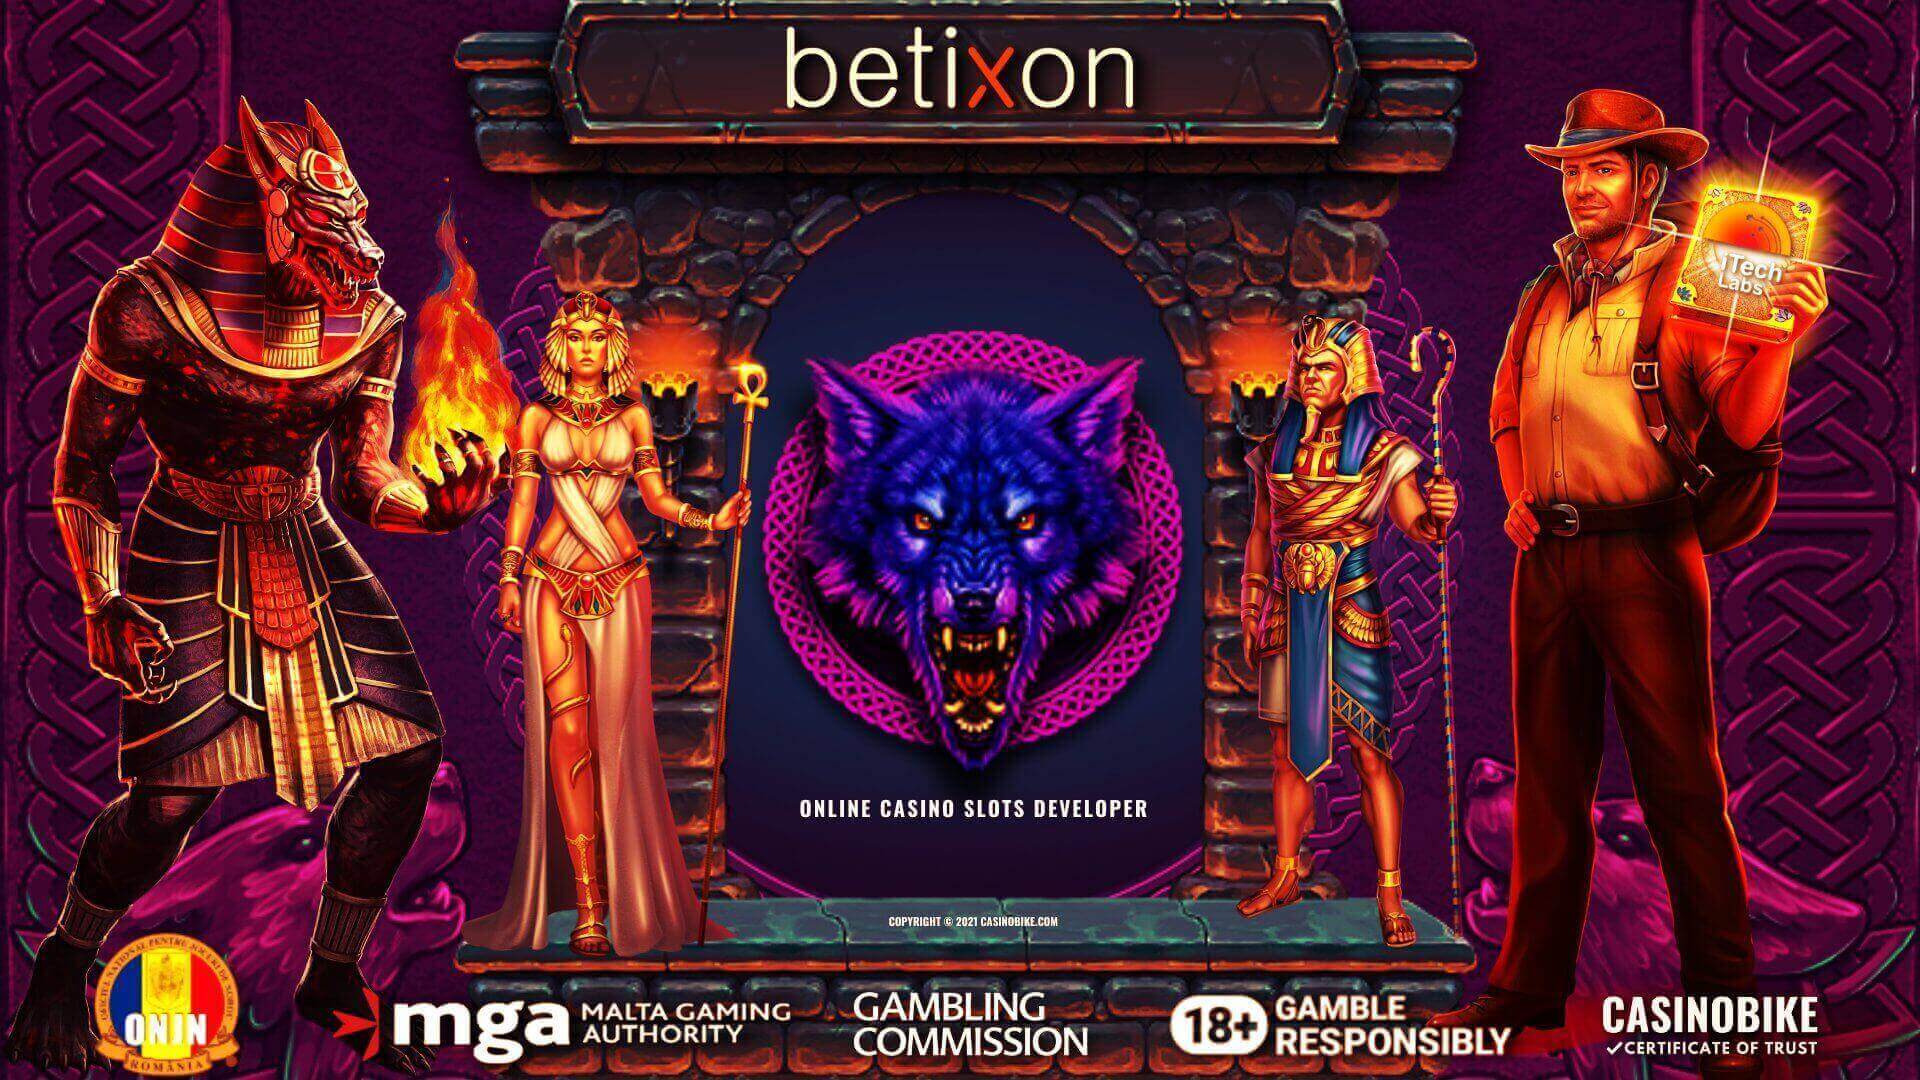 Betixon Online Casino Slot Games Developer Review